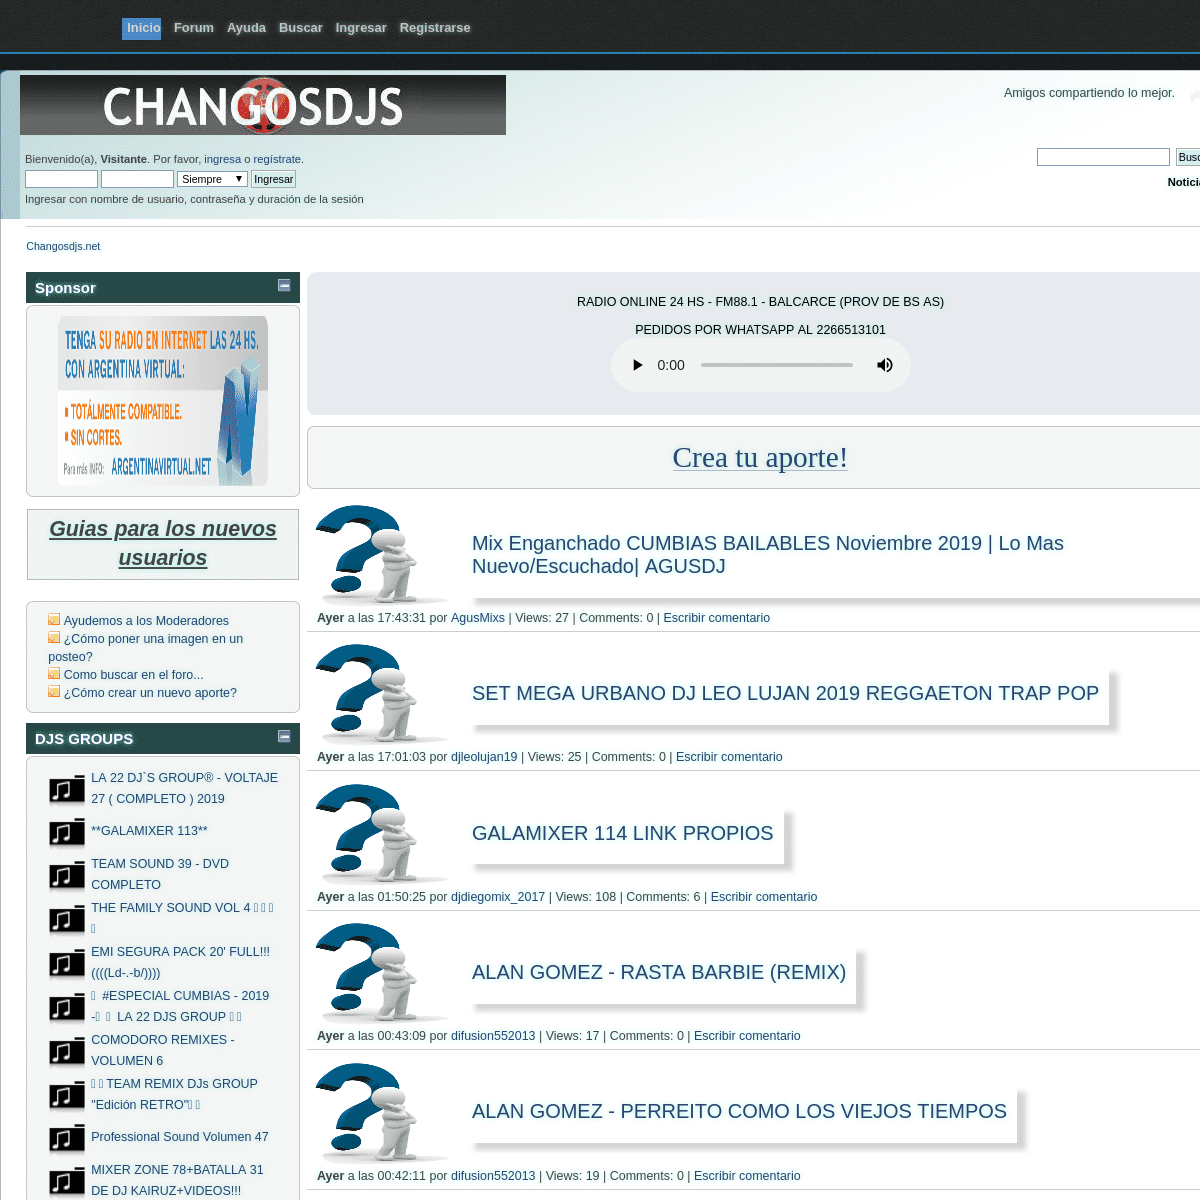 A complete backup of changosdjs.net